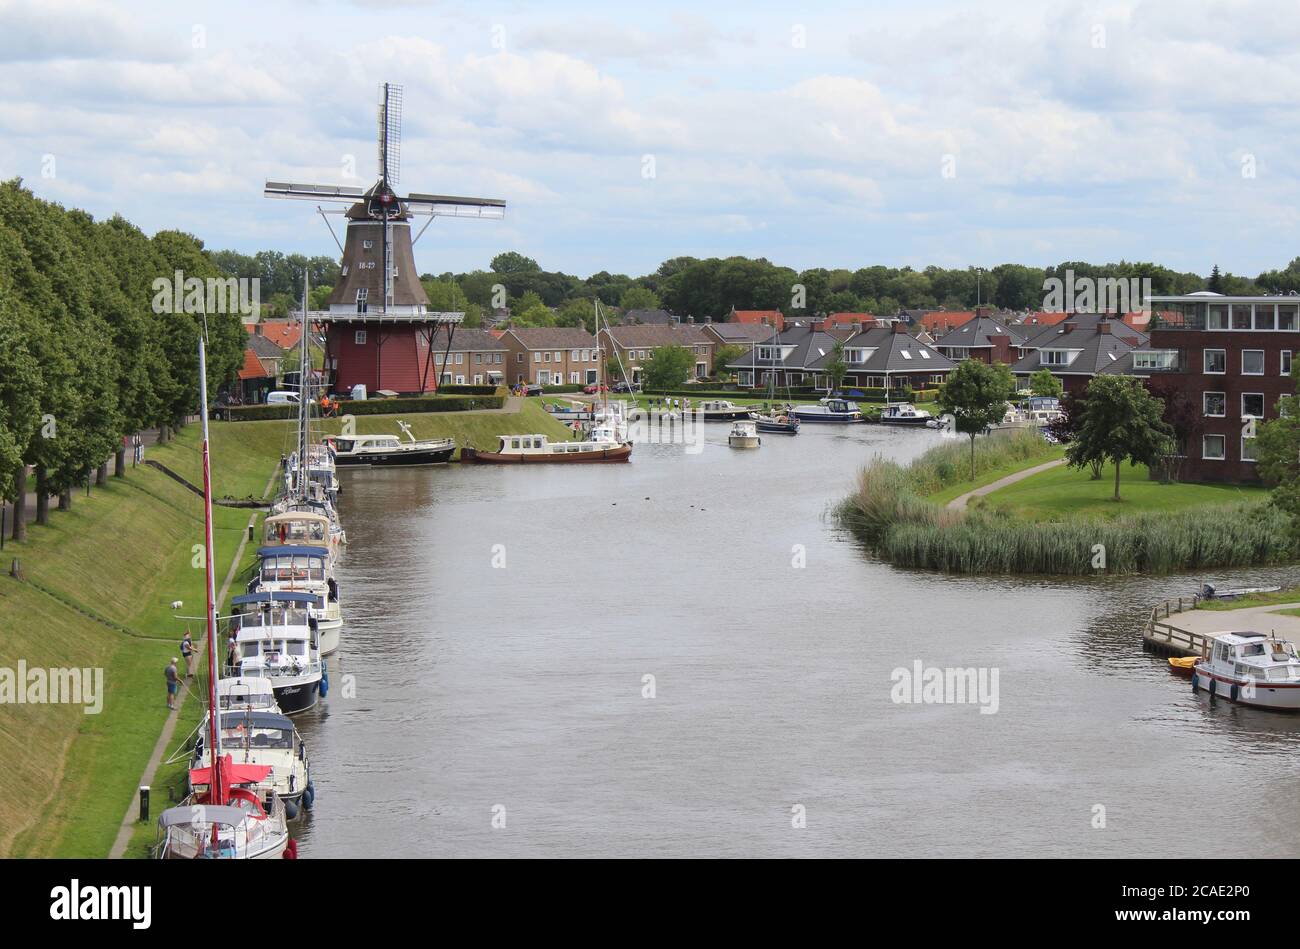 DOKKUM, NETHERLANDS, 22 JULY 2020: View from the 'Zelden rust' windmill in Dokkum looking towards 'De Hoop' windmill. Both windmills are tourist attra Stock Photo